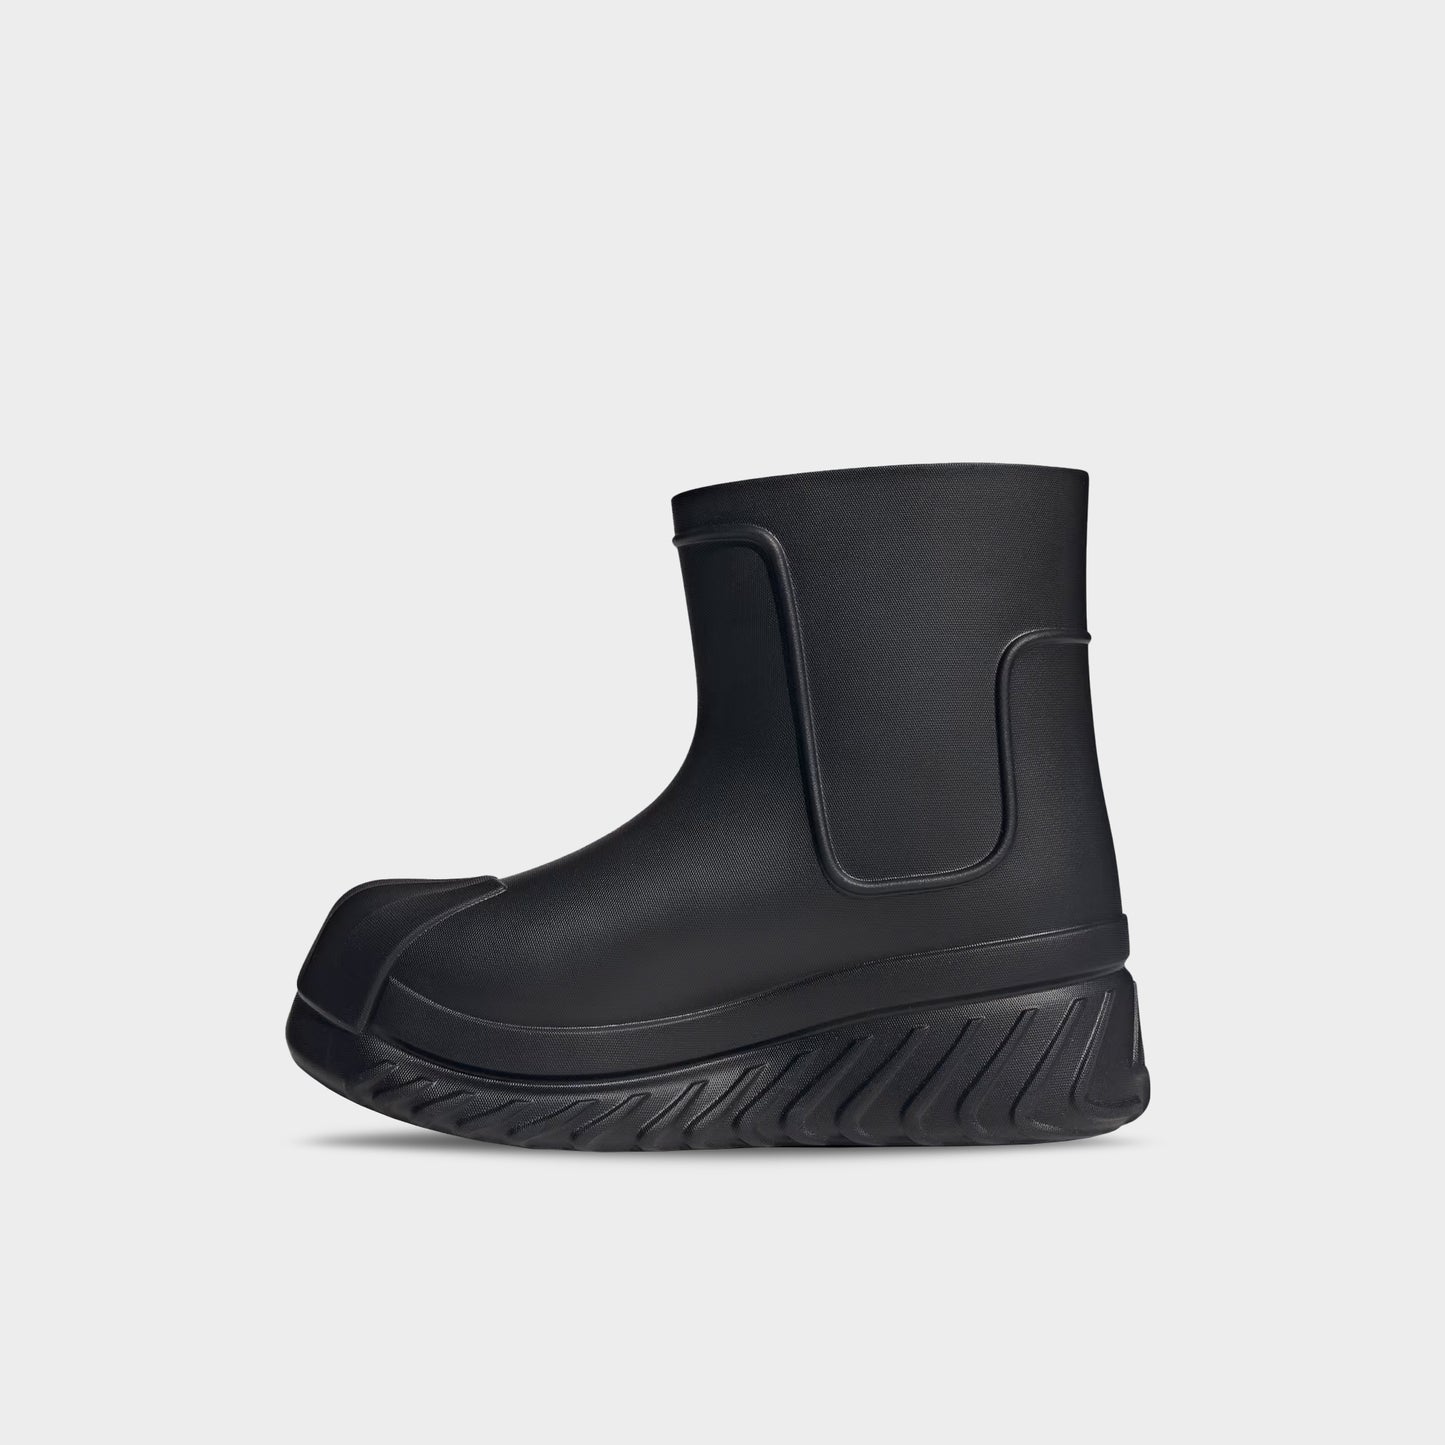 Adidas Adifoam Superstar Boot in black